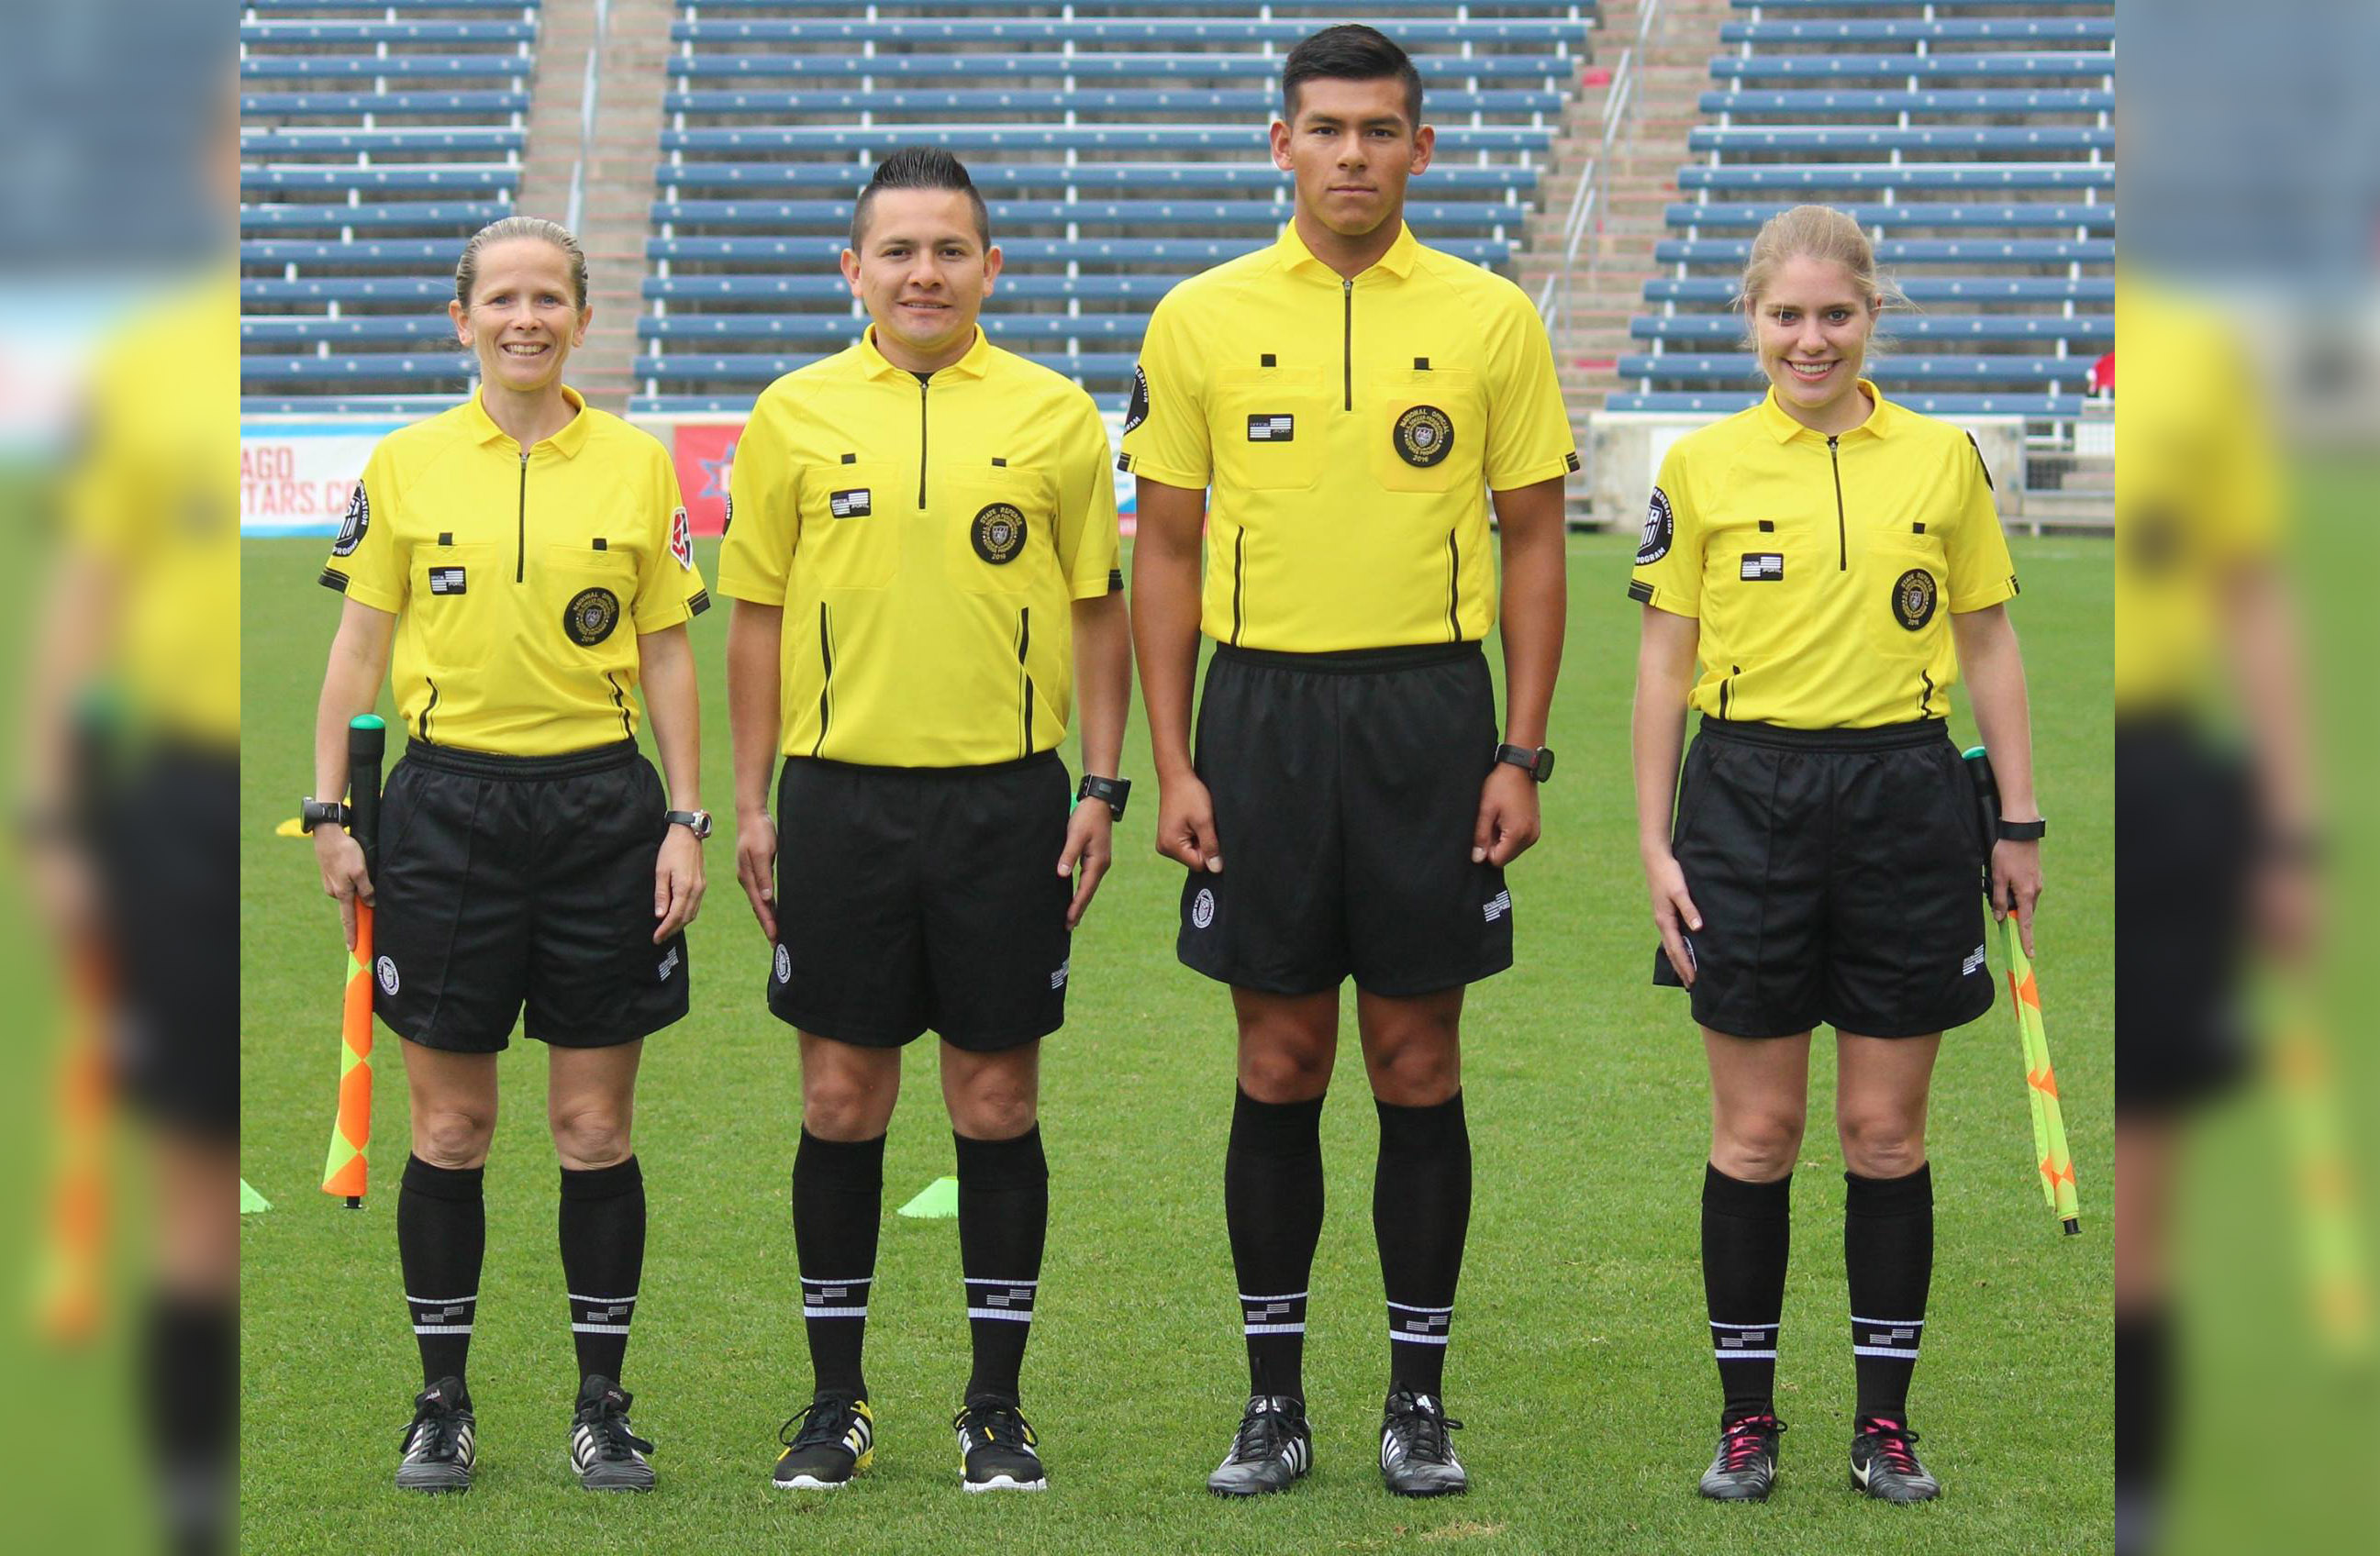 soccer referee uniforms